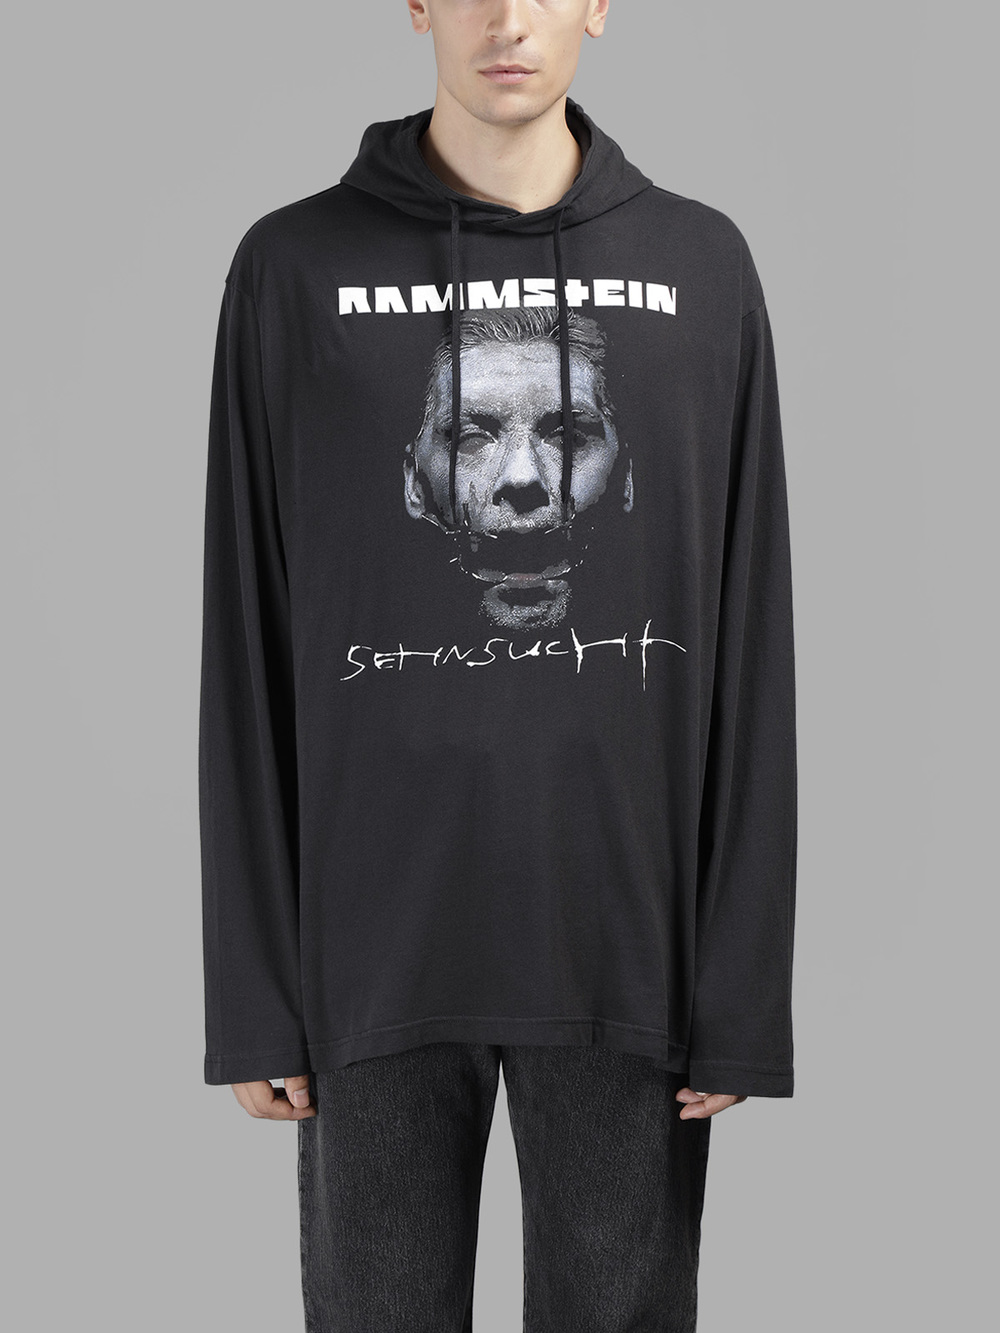 Vetements Release Rammstein Hoodie – PAUSE Online | Men's Fashion ...